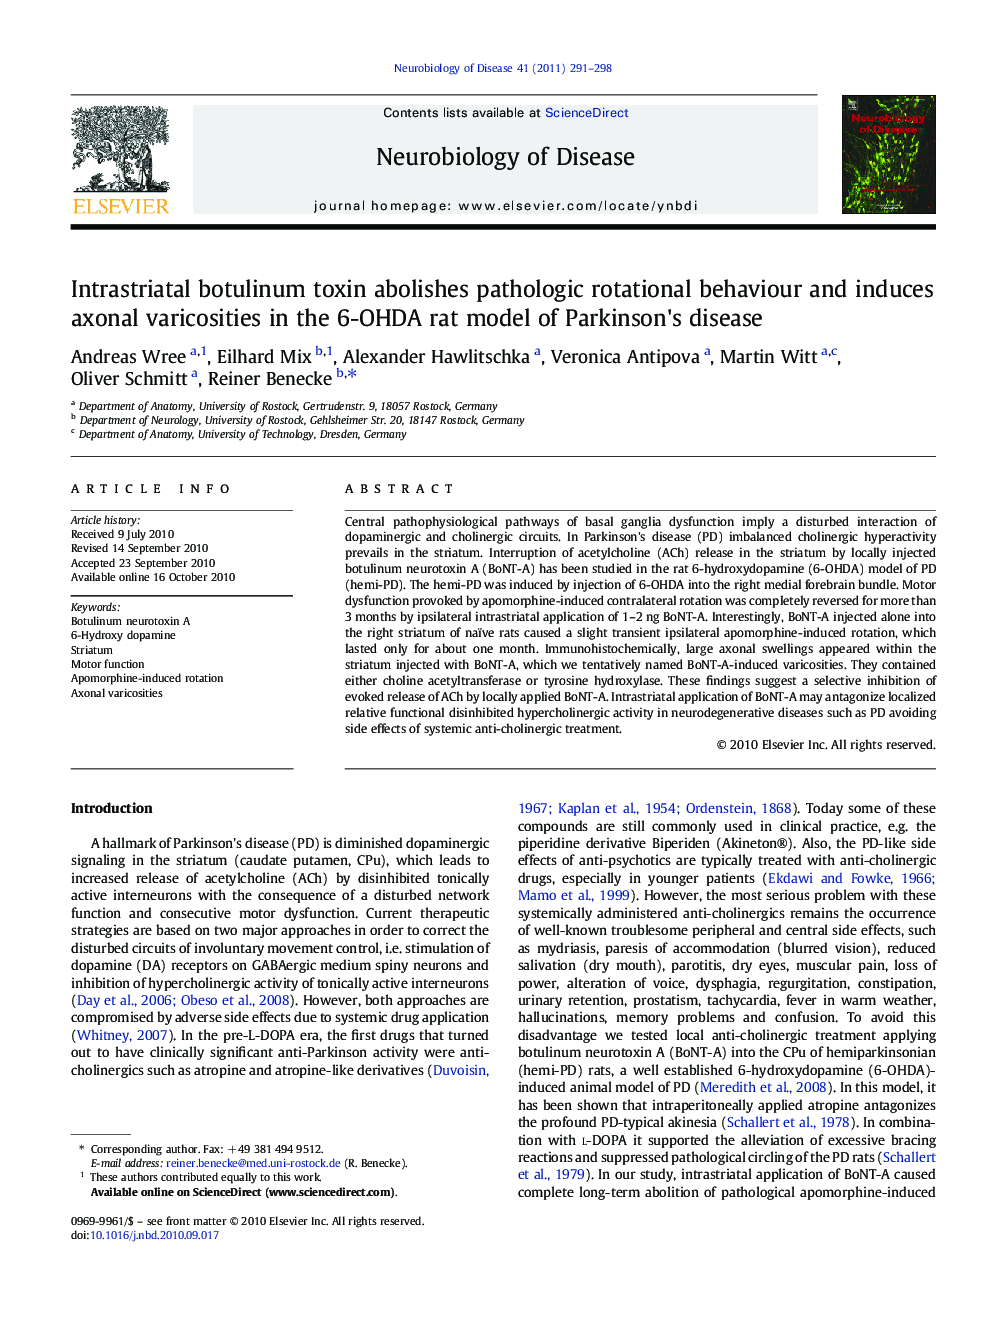 Intrastriatal botulinum toxin abolishes pathologic rotational behaviour and induces axonal varicosities in the 6-OHDA rat model of Parkinson's disease